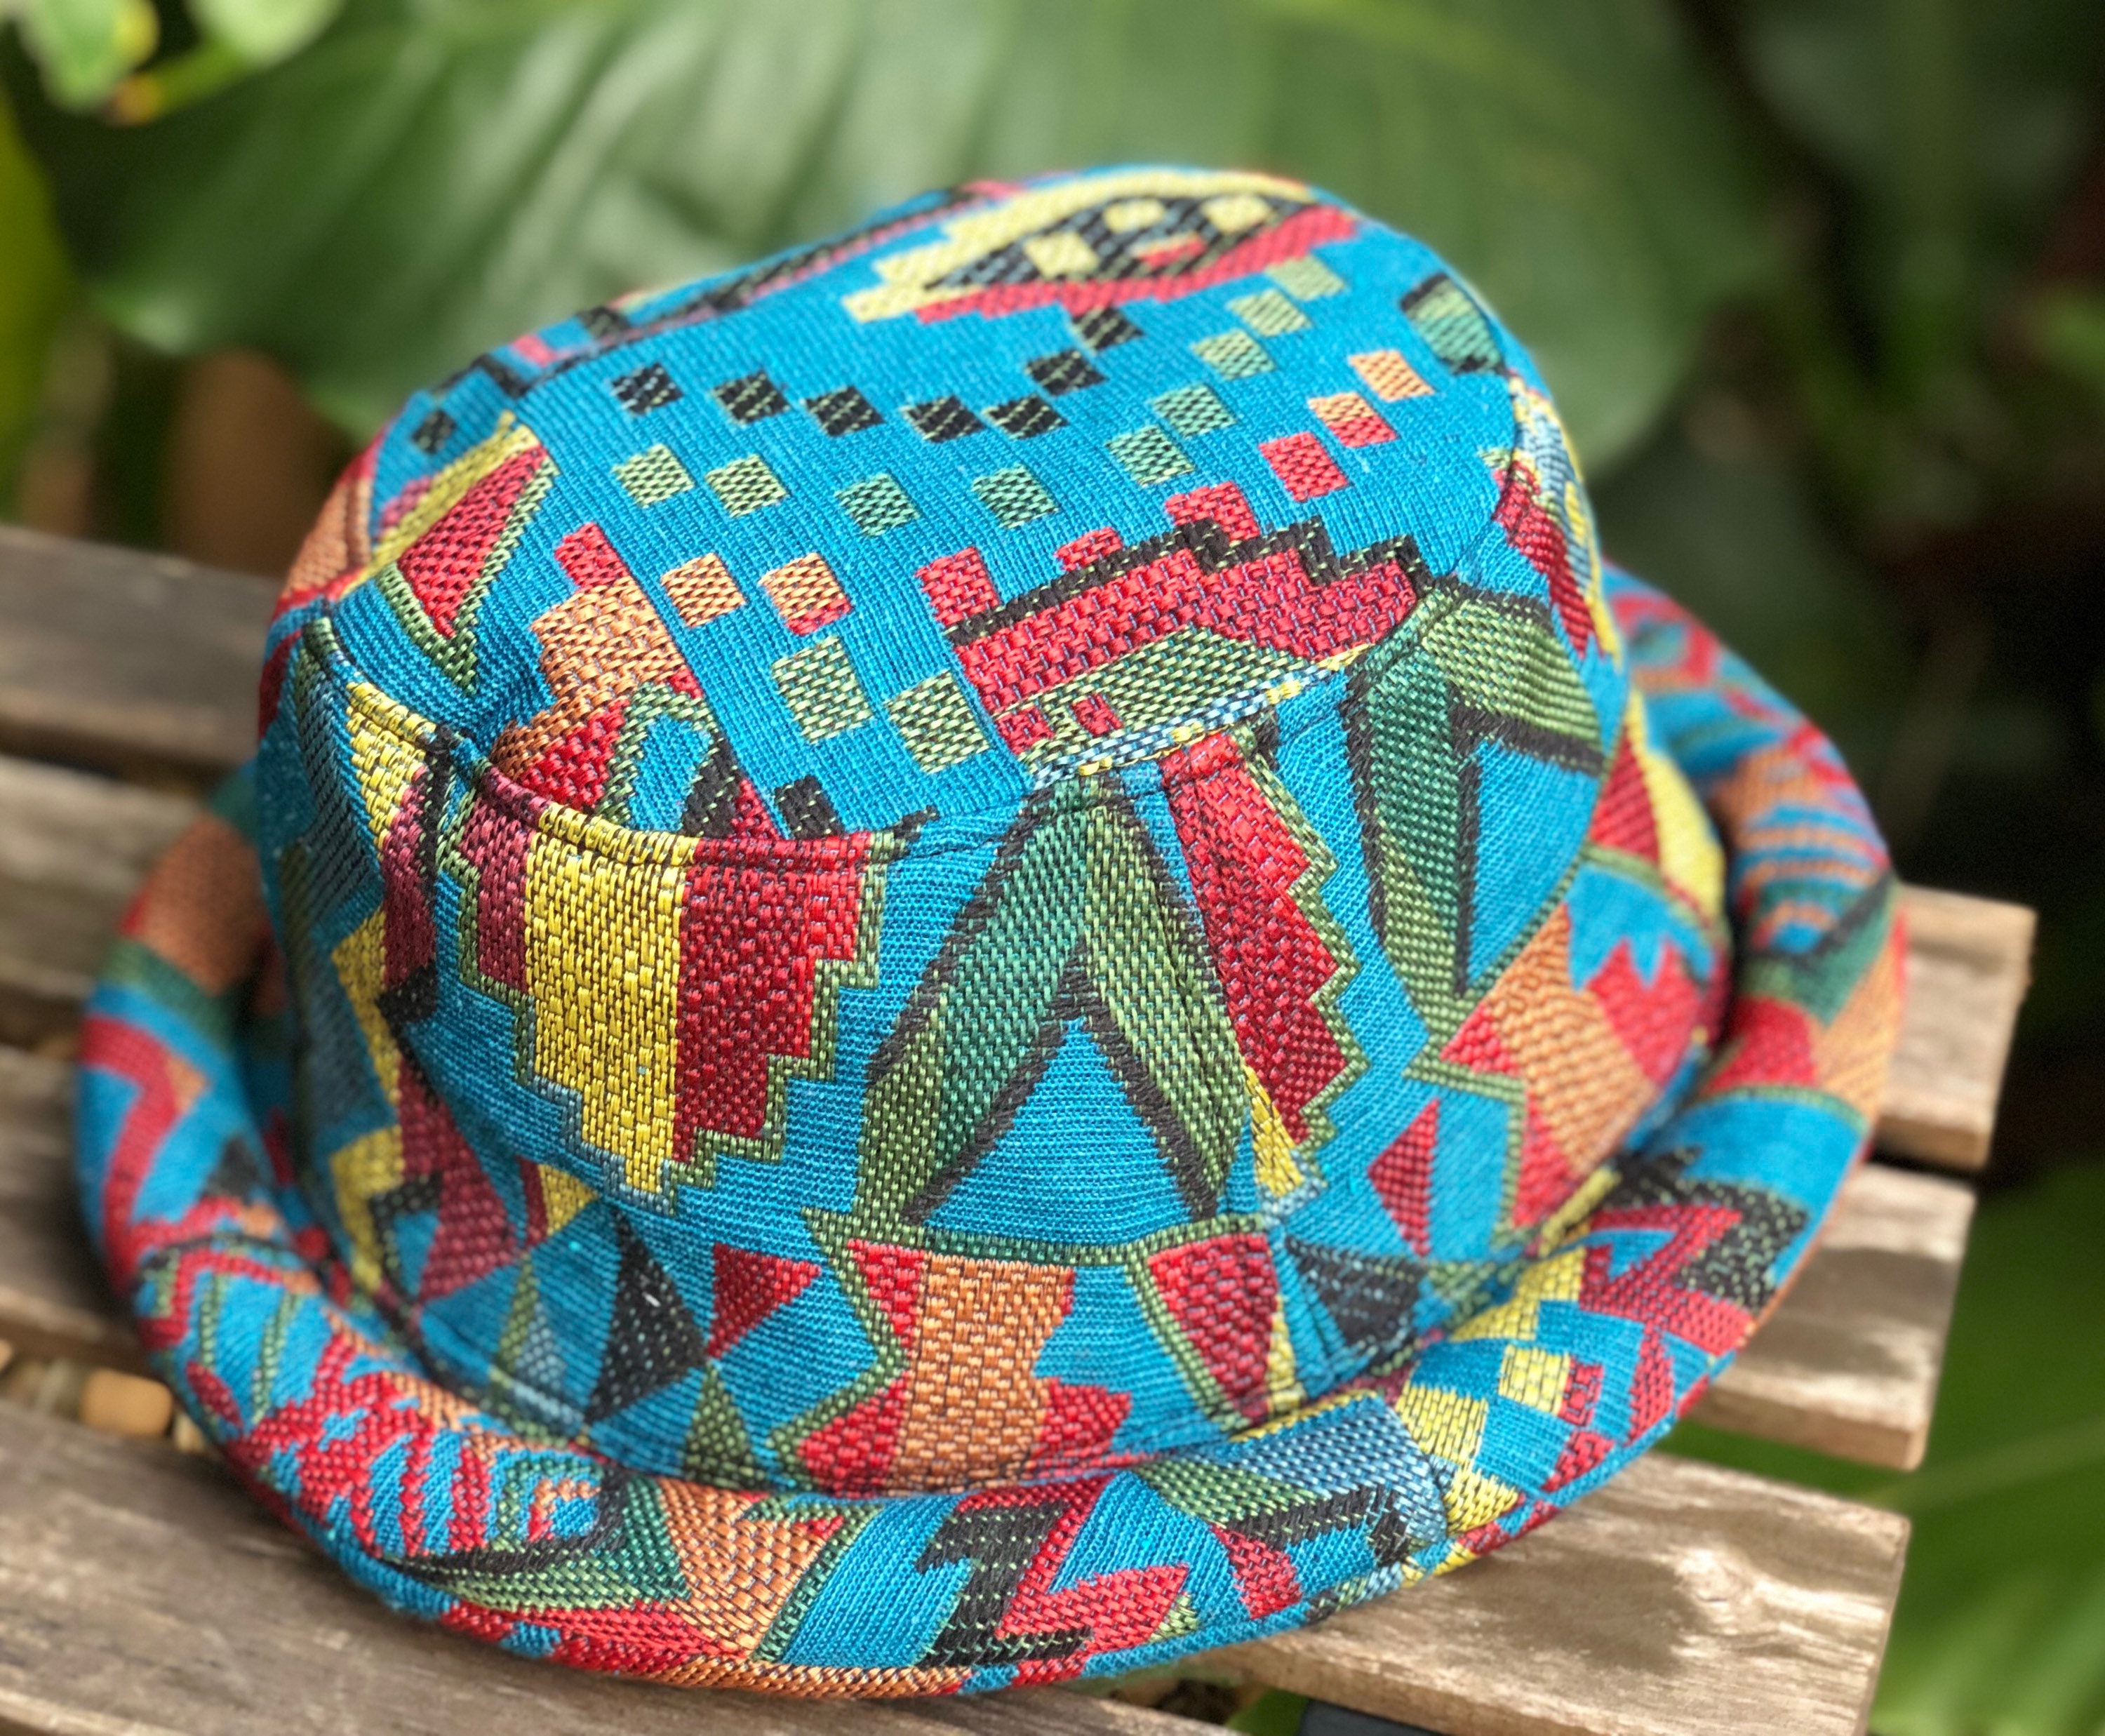 Geometric Bucket Hat Cotton Woven Hat Aztec Ikat Style Boho Hippie